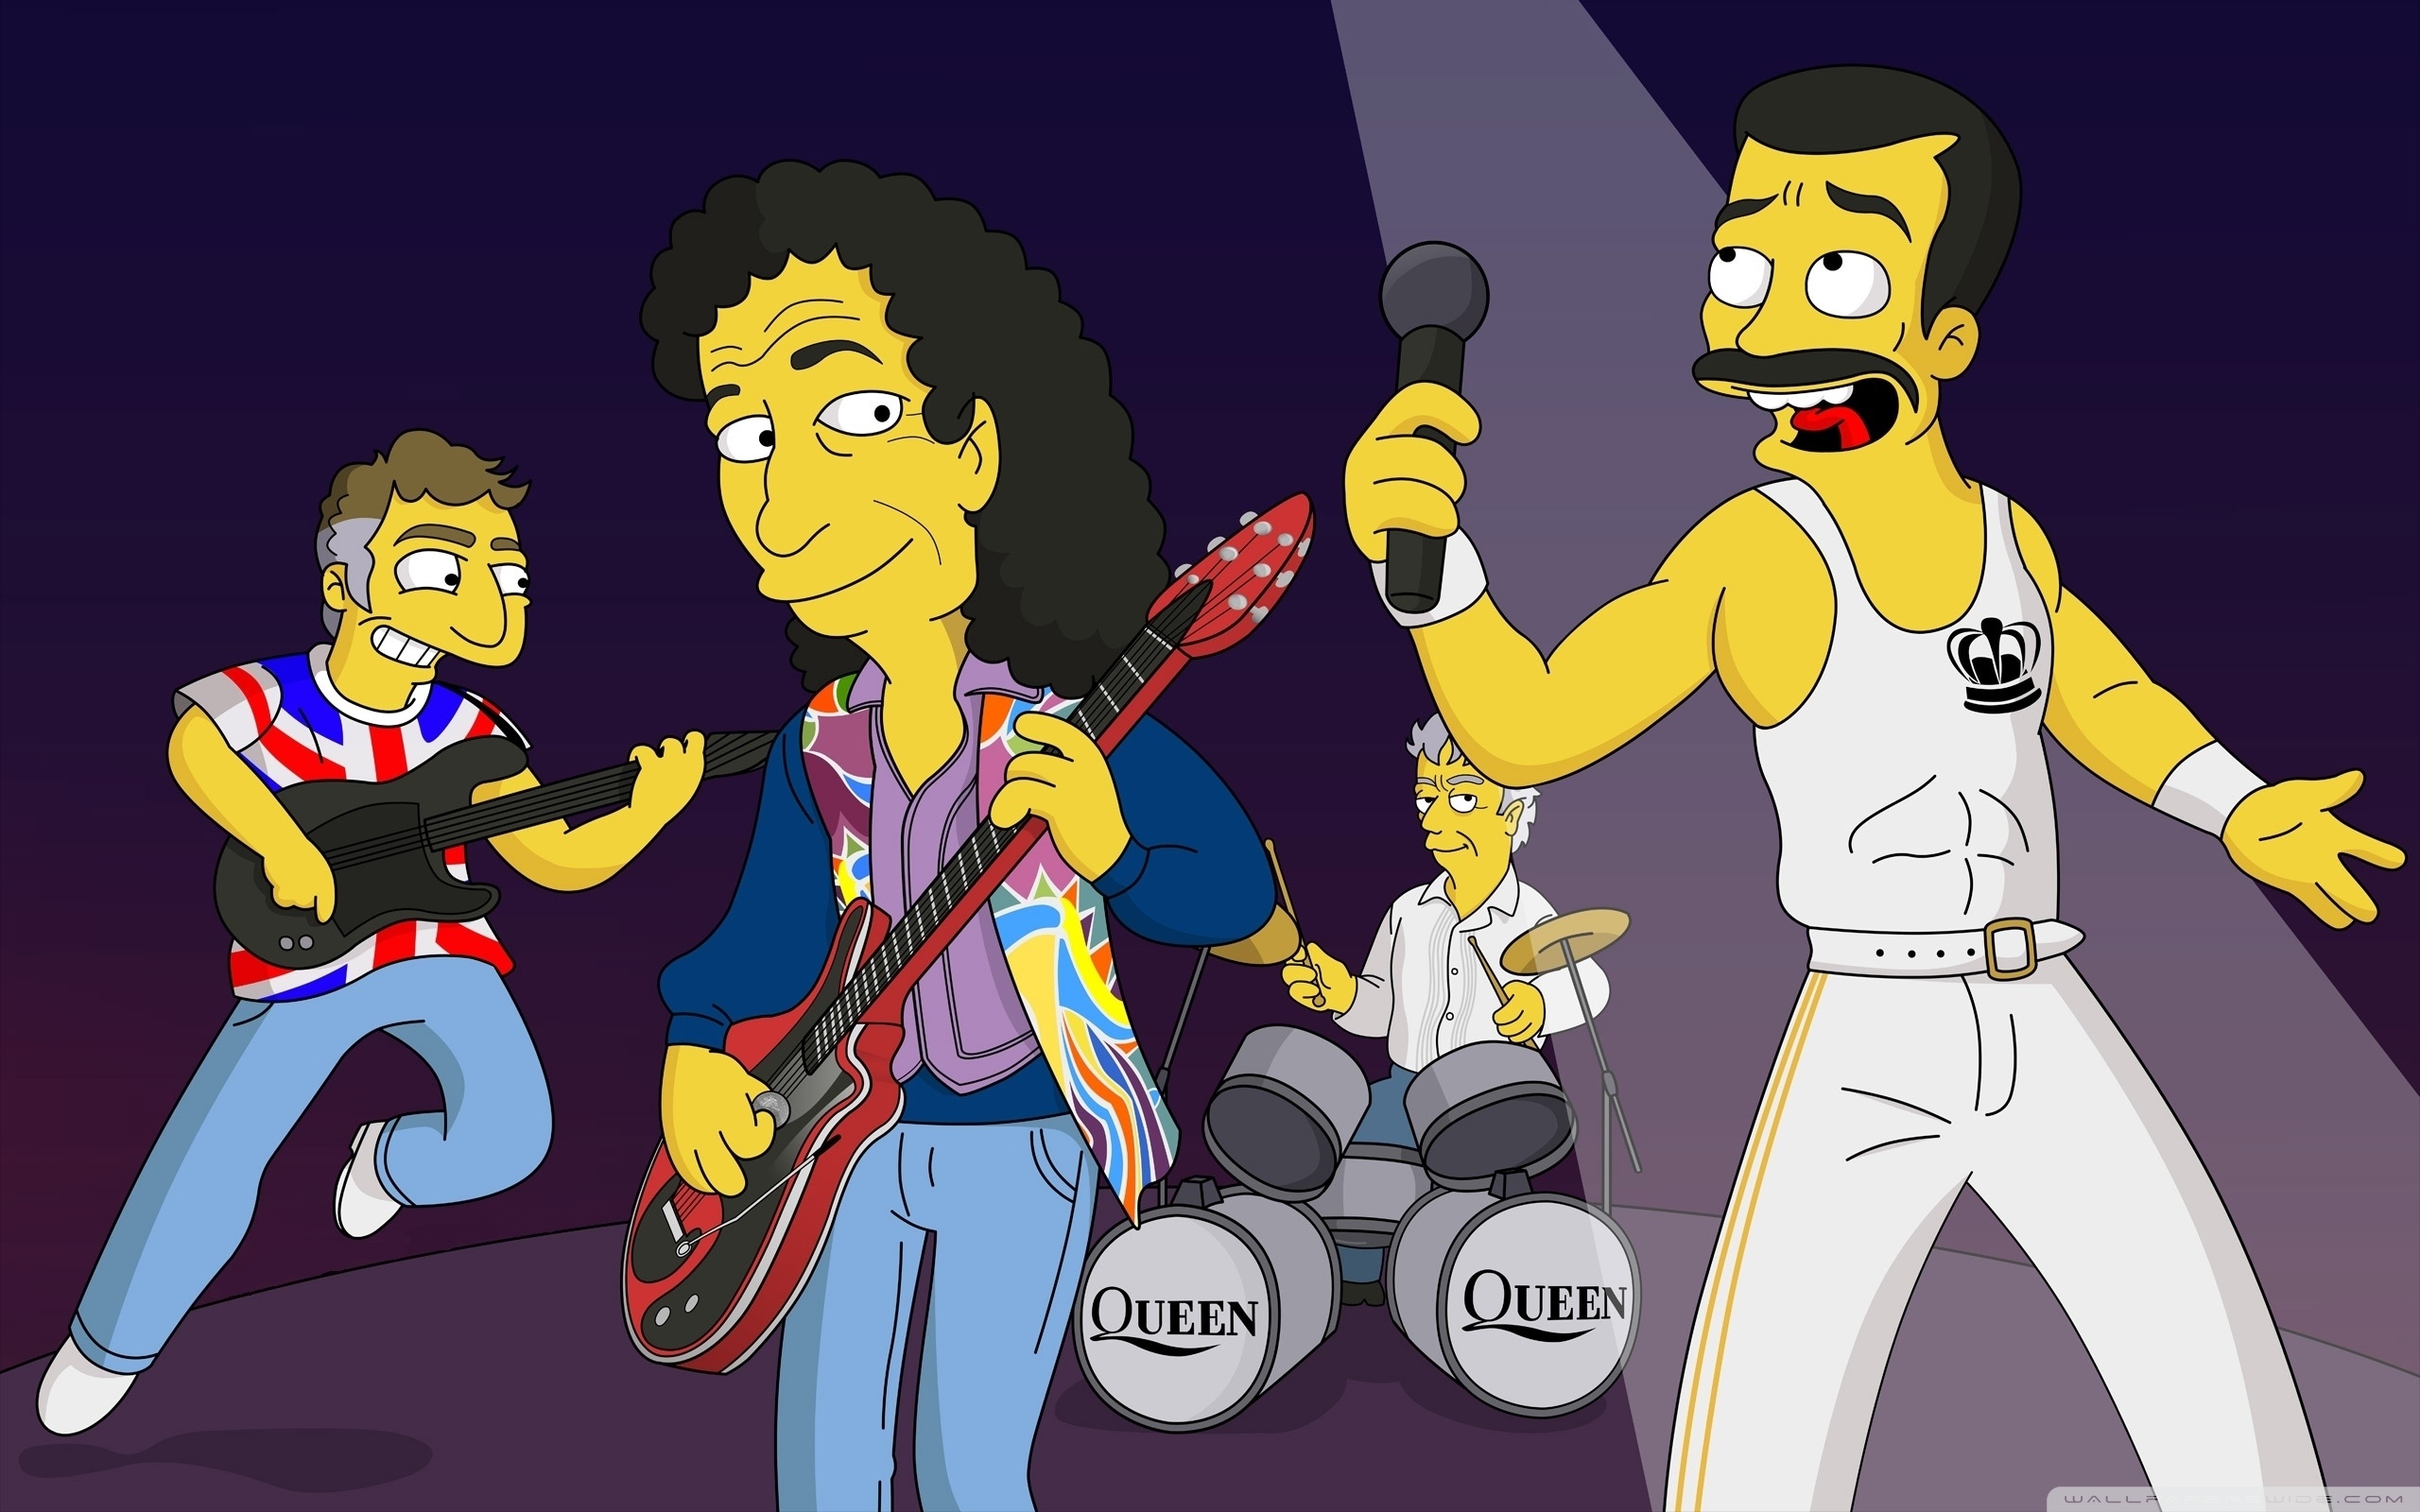 Download 21 bart-simpsons-wallpapers Simpsons-Homer-Simpson-Guitar-Cartoon-Hd-Wallpaper-.jpg